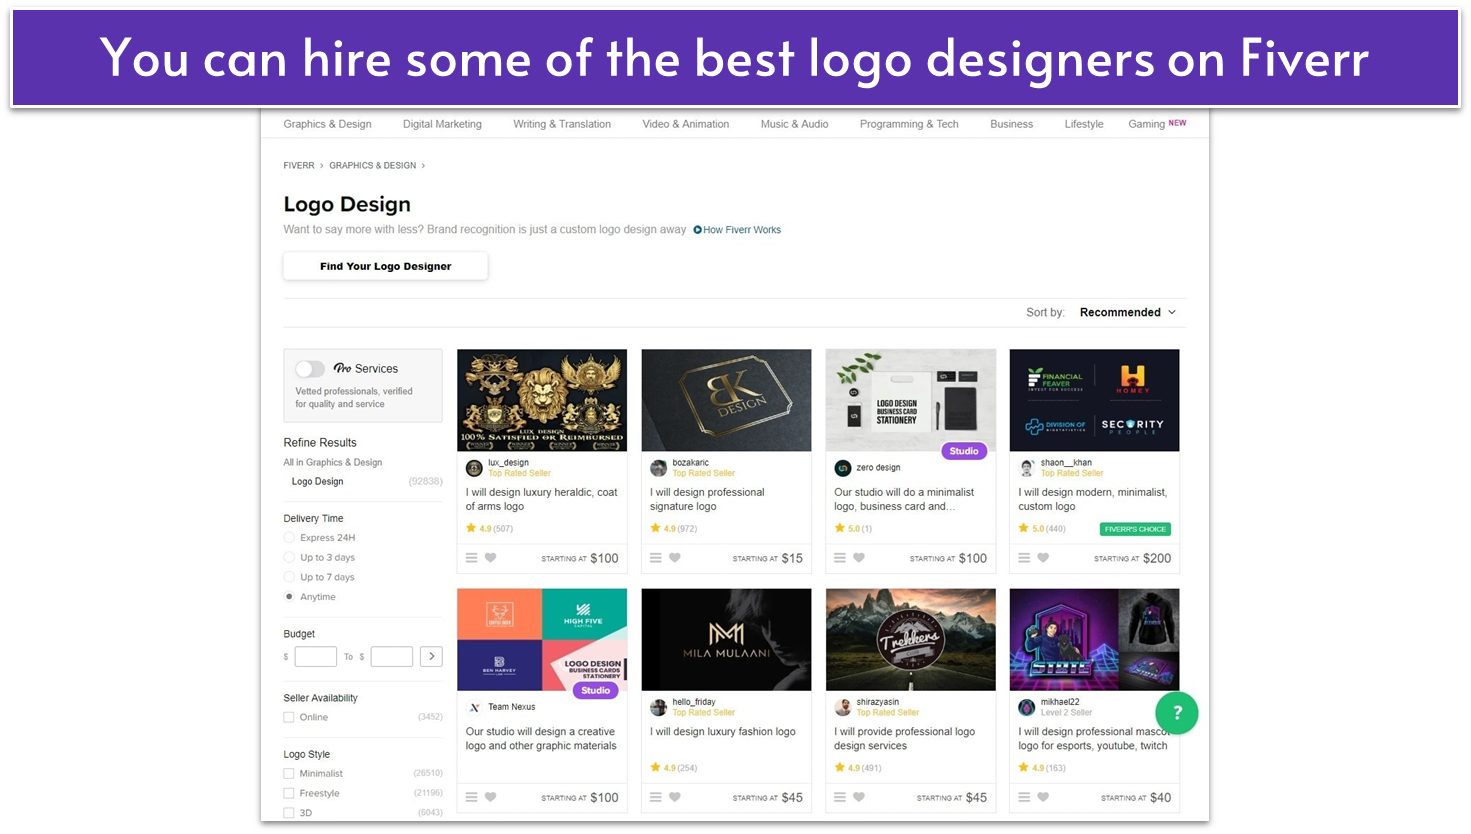 Fiverr’s logo designers search list